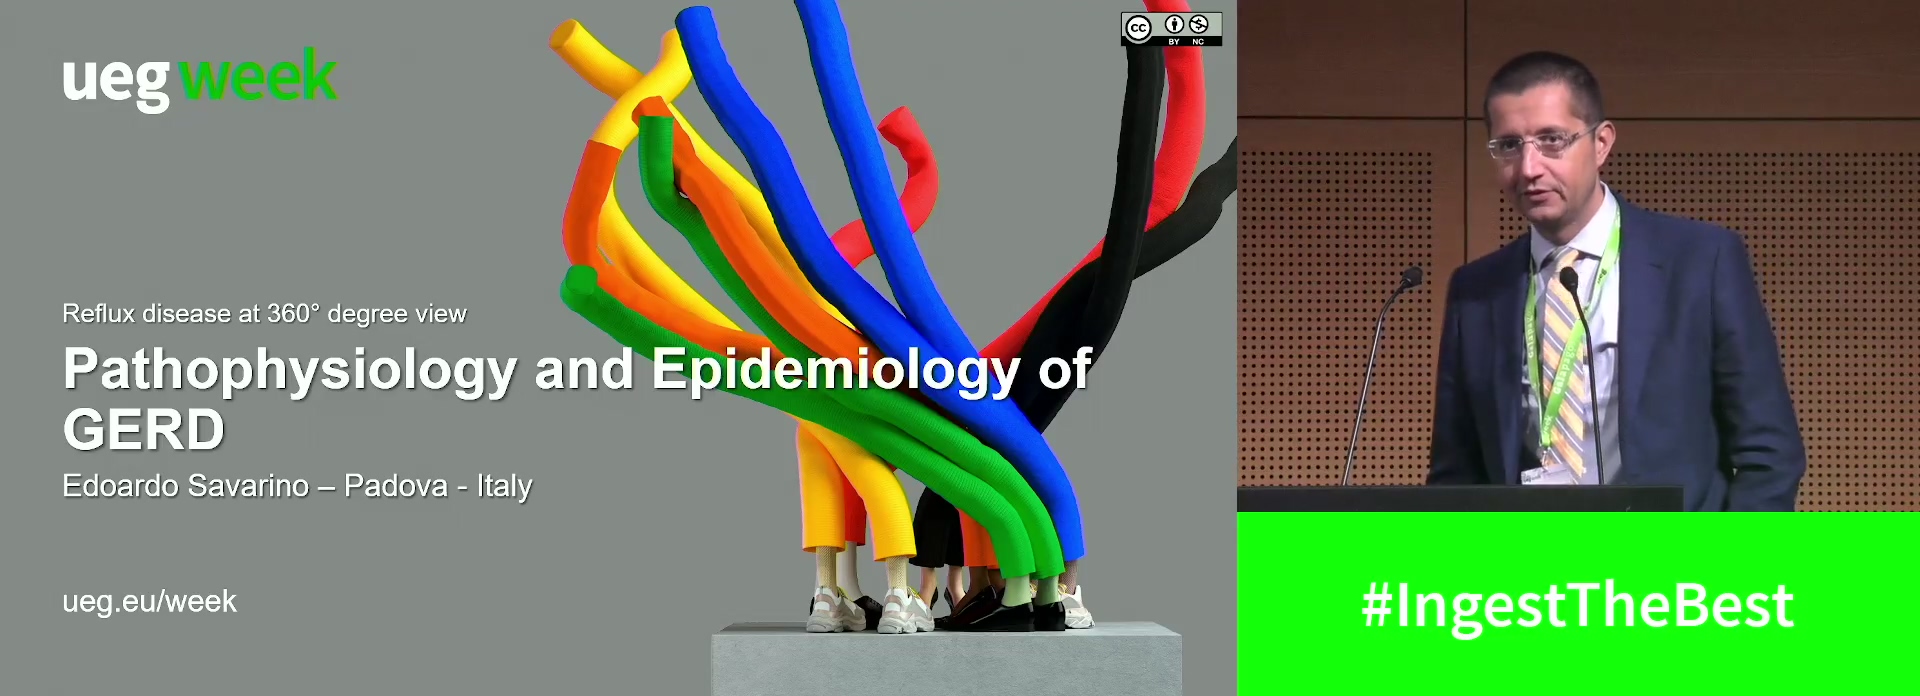 Pathophysiology and epidemiology of GERD